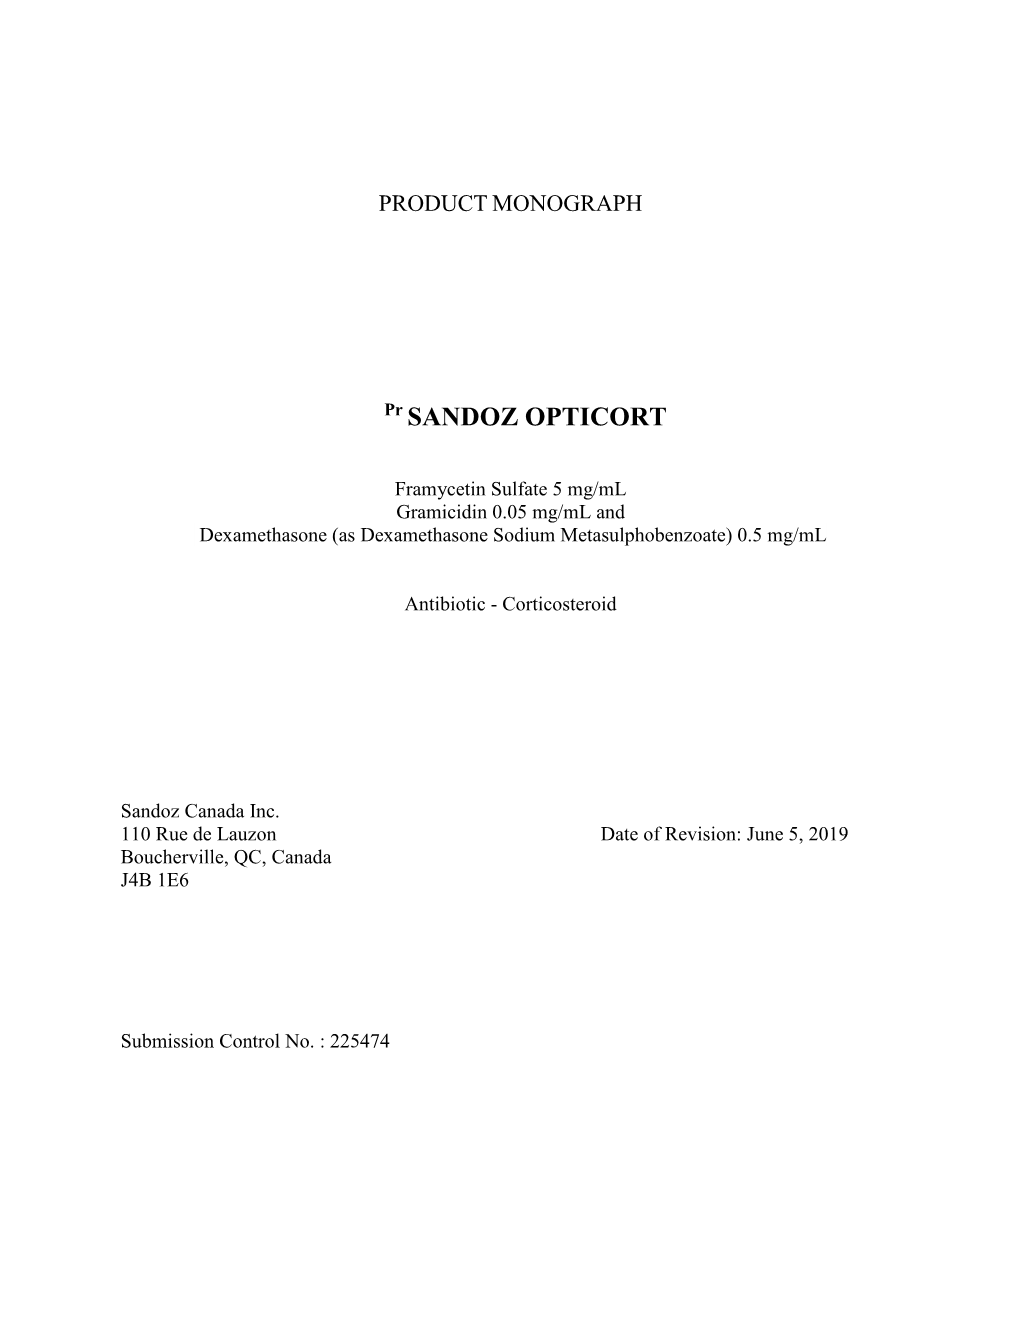 Sandoz Opticort Product Monograph.Pdf